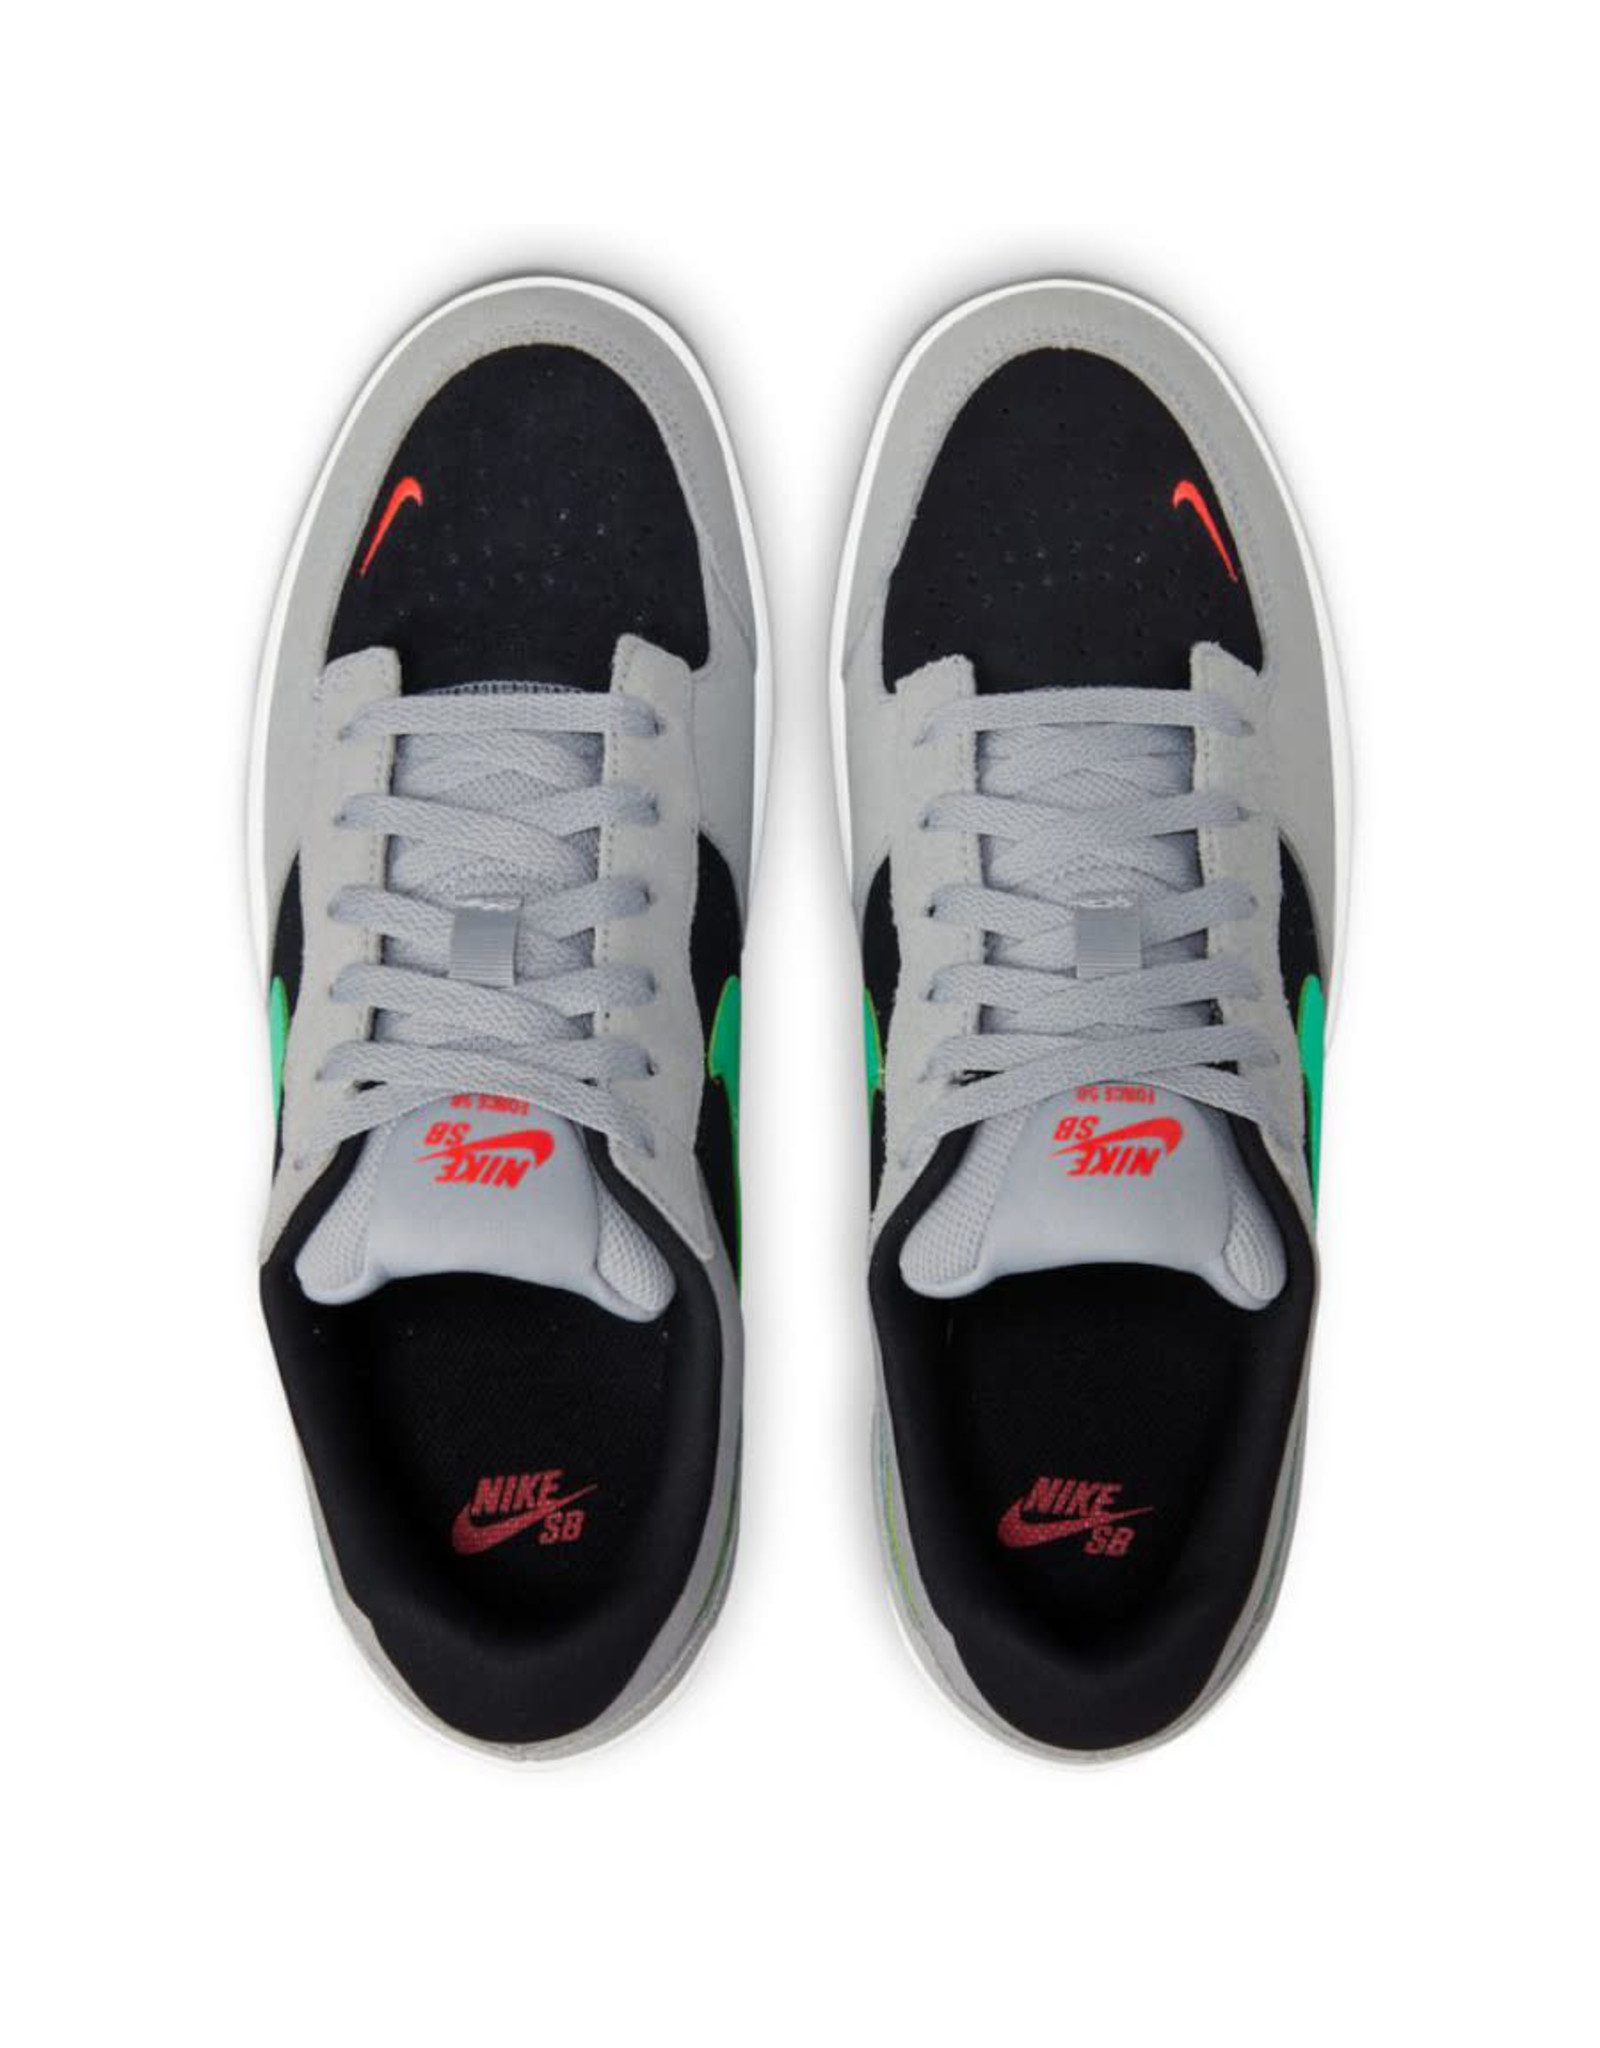 Nike SB Nike SB Shoe Force 58 Premium (Grey/Black/Magenta)